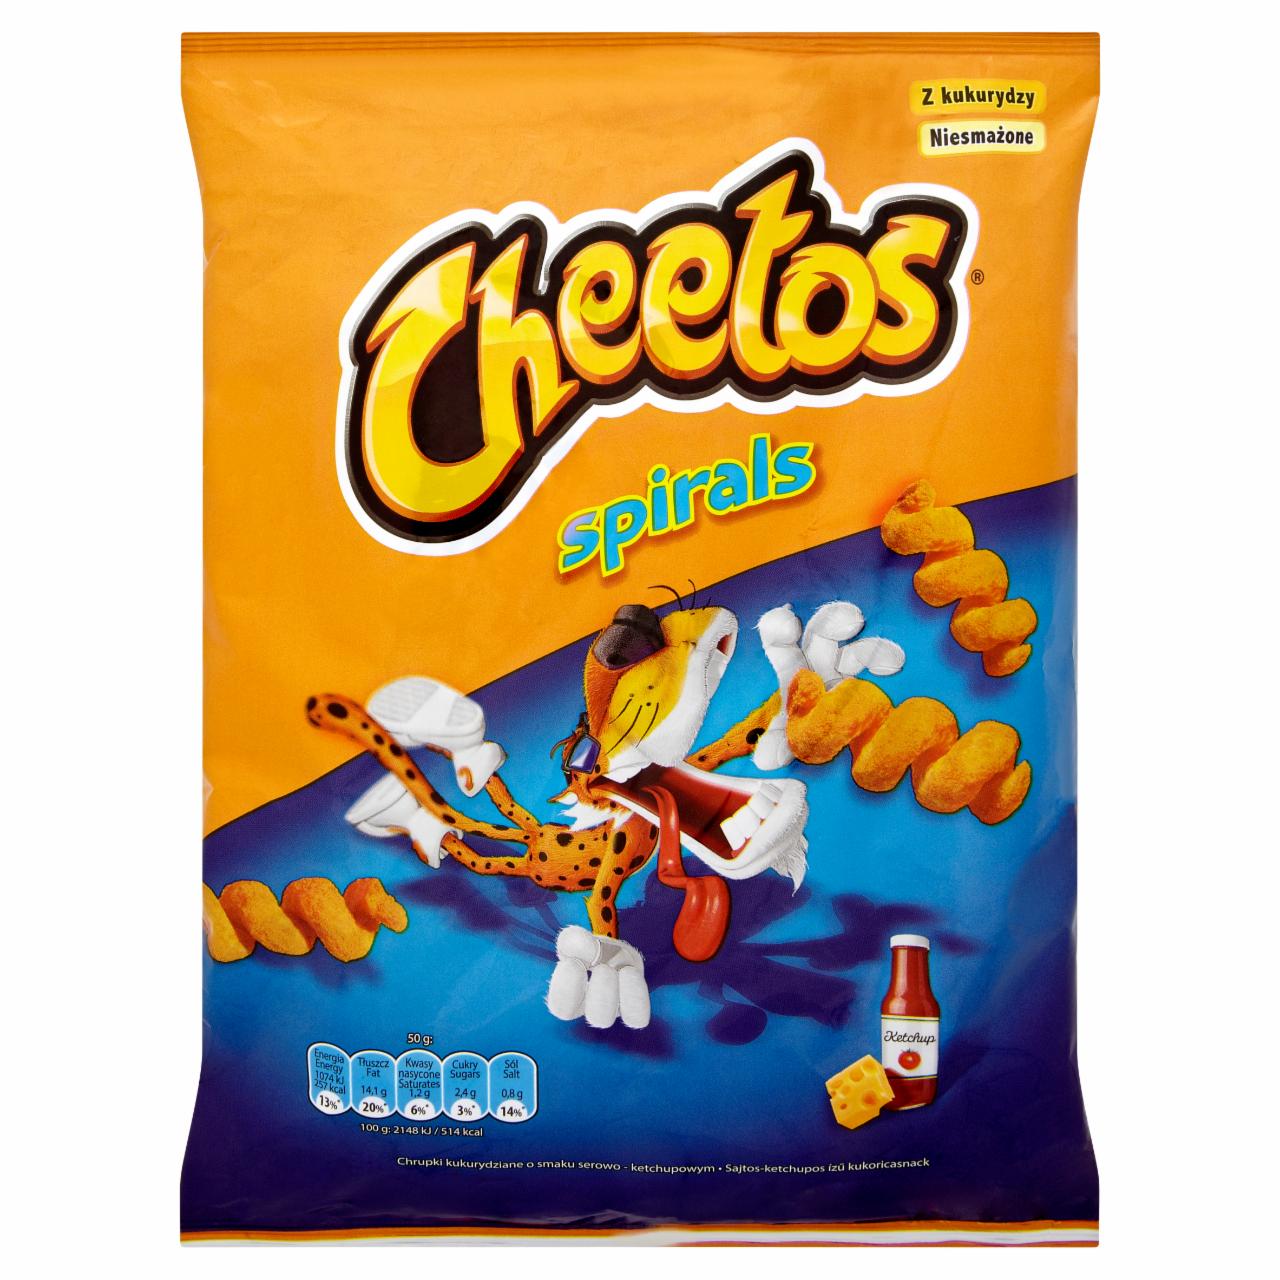 Képek - Cheetos Spirals Sajtos-ketchupos ízű kukoricasnack 50 g